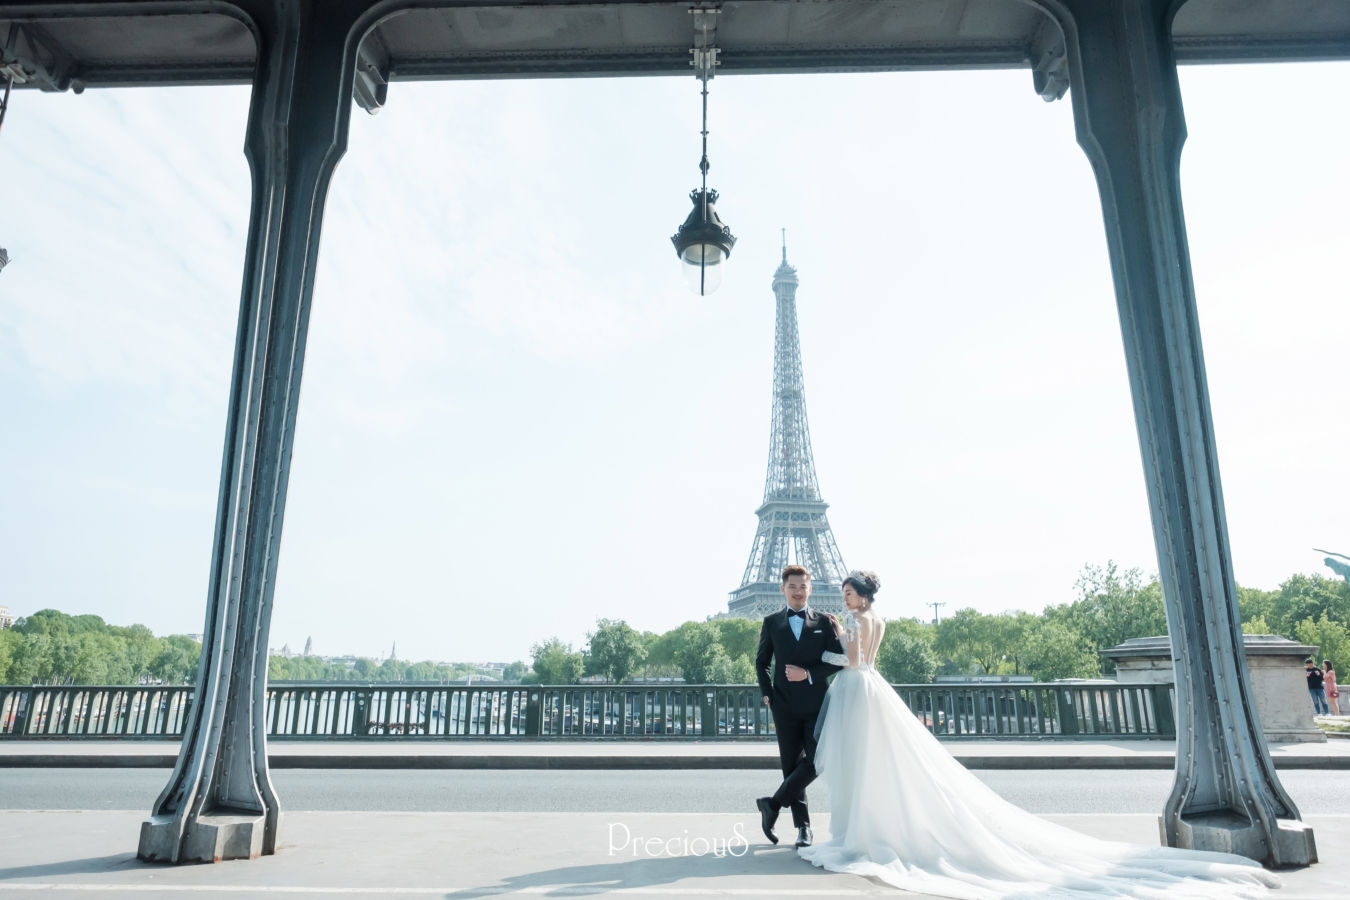 wedding-photography, wedding, destination-weddings - Precious Bridal's most popular destinations for pre-weddings in 2019